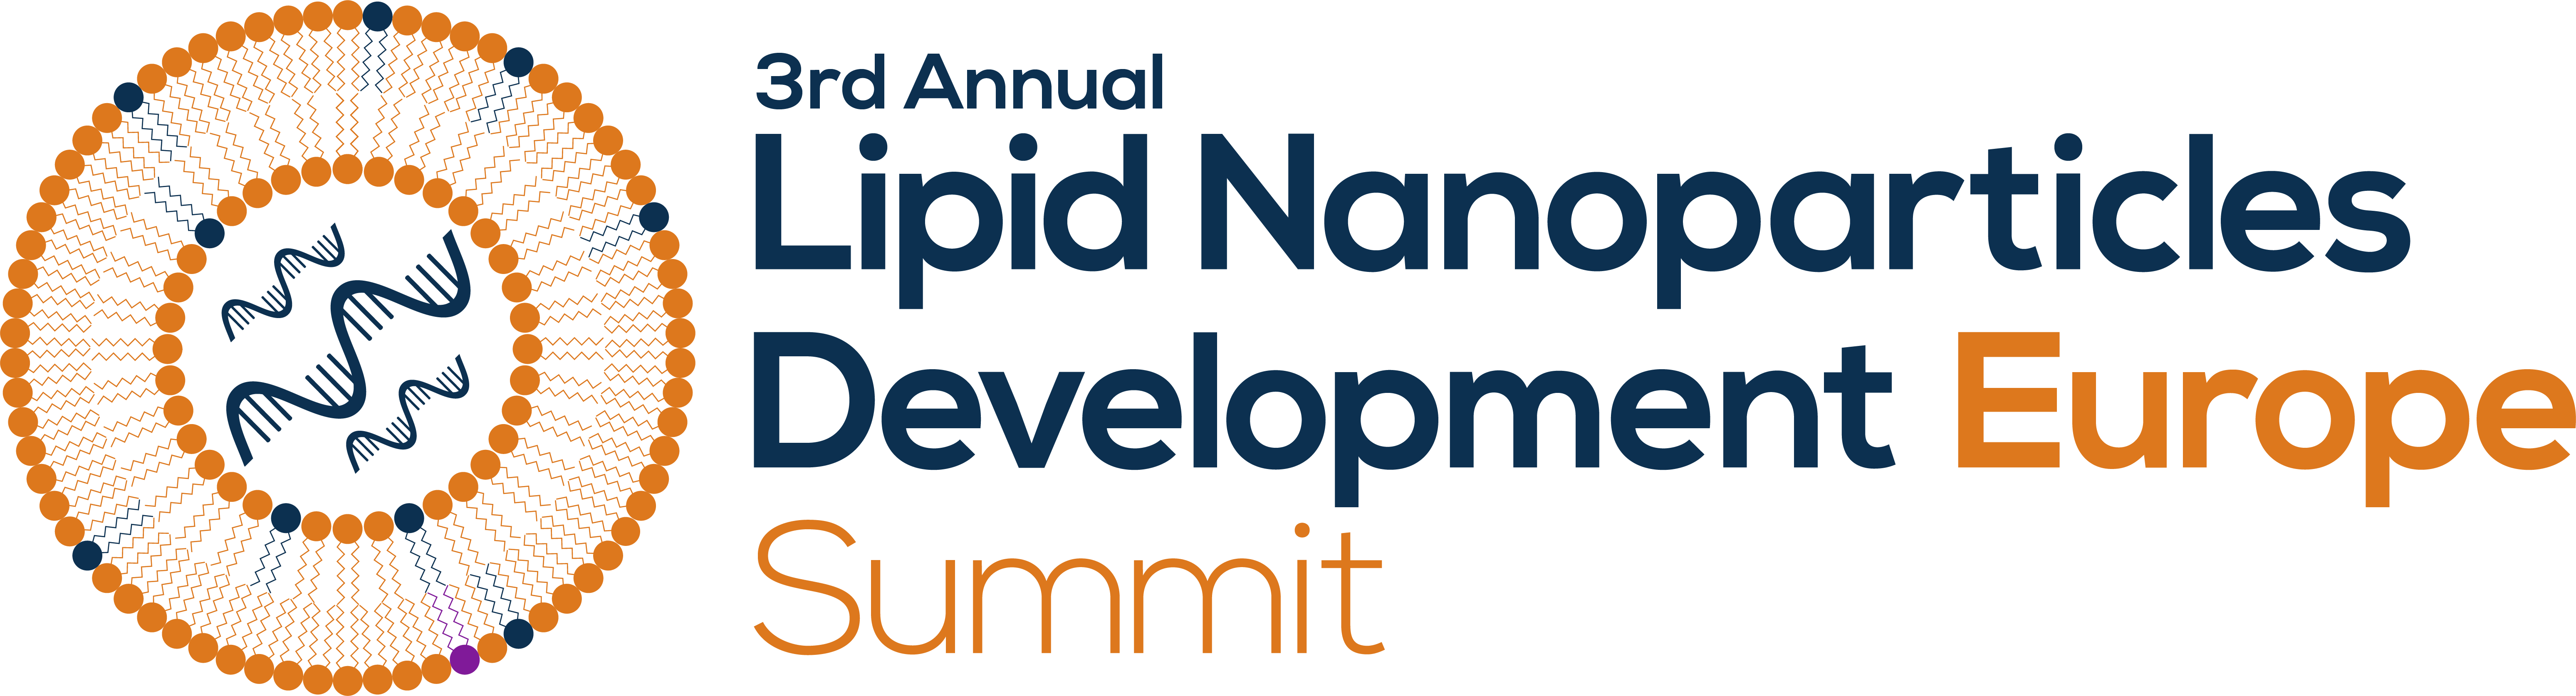 3rd Annual Lipid Nanoparticles Development Europe Summit logo (1)